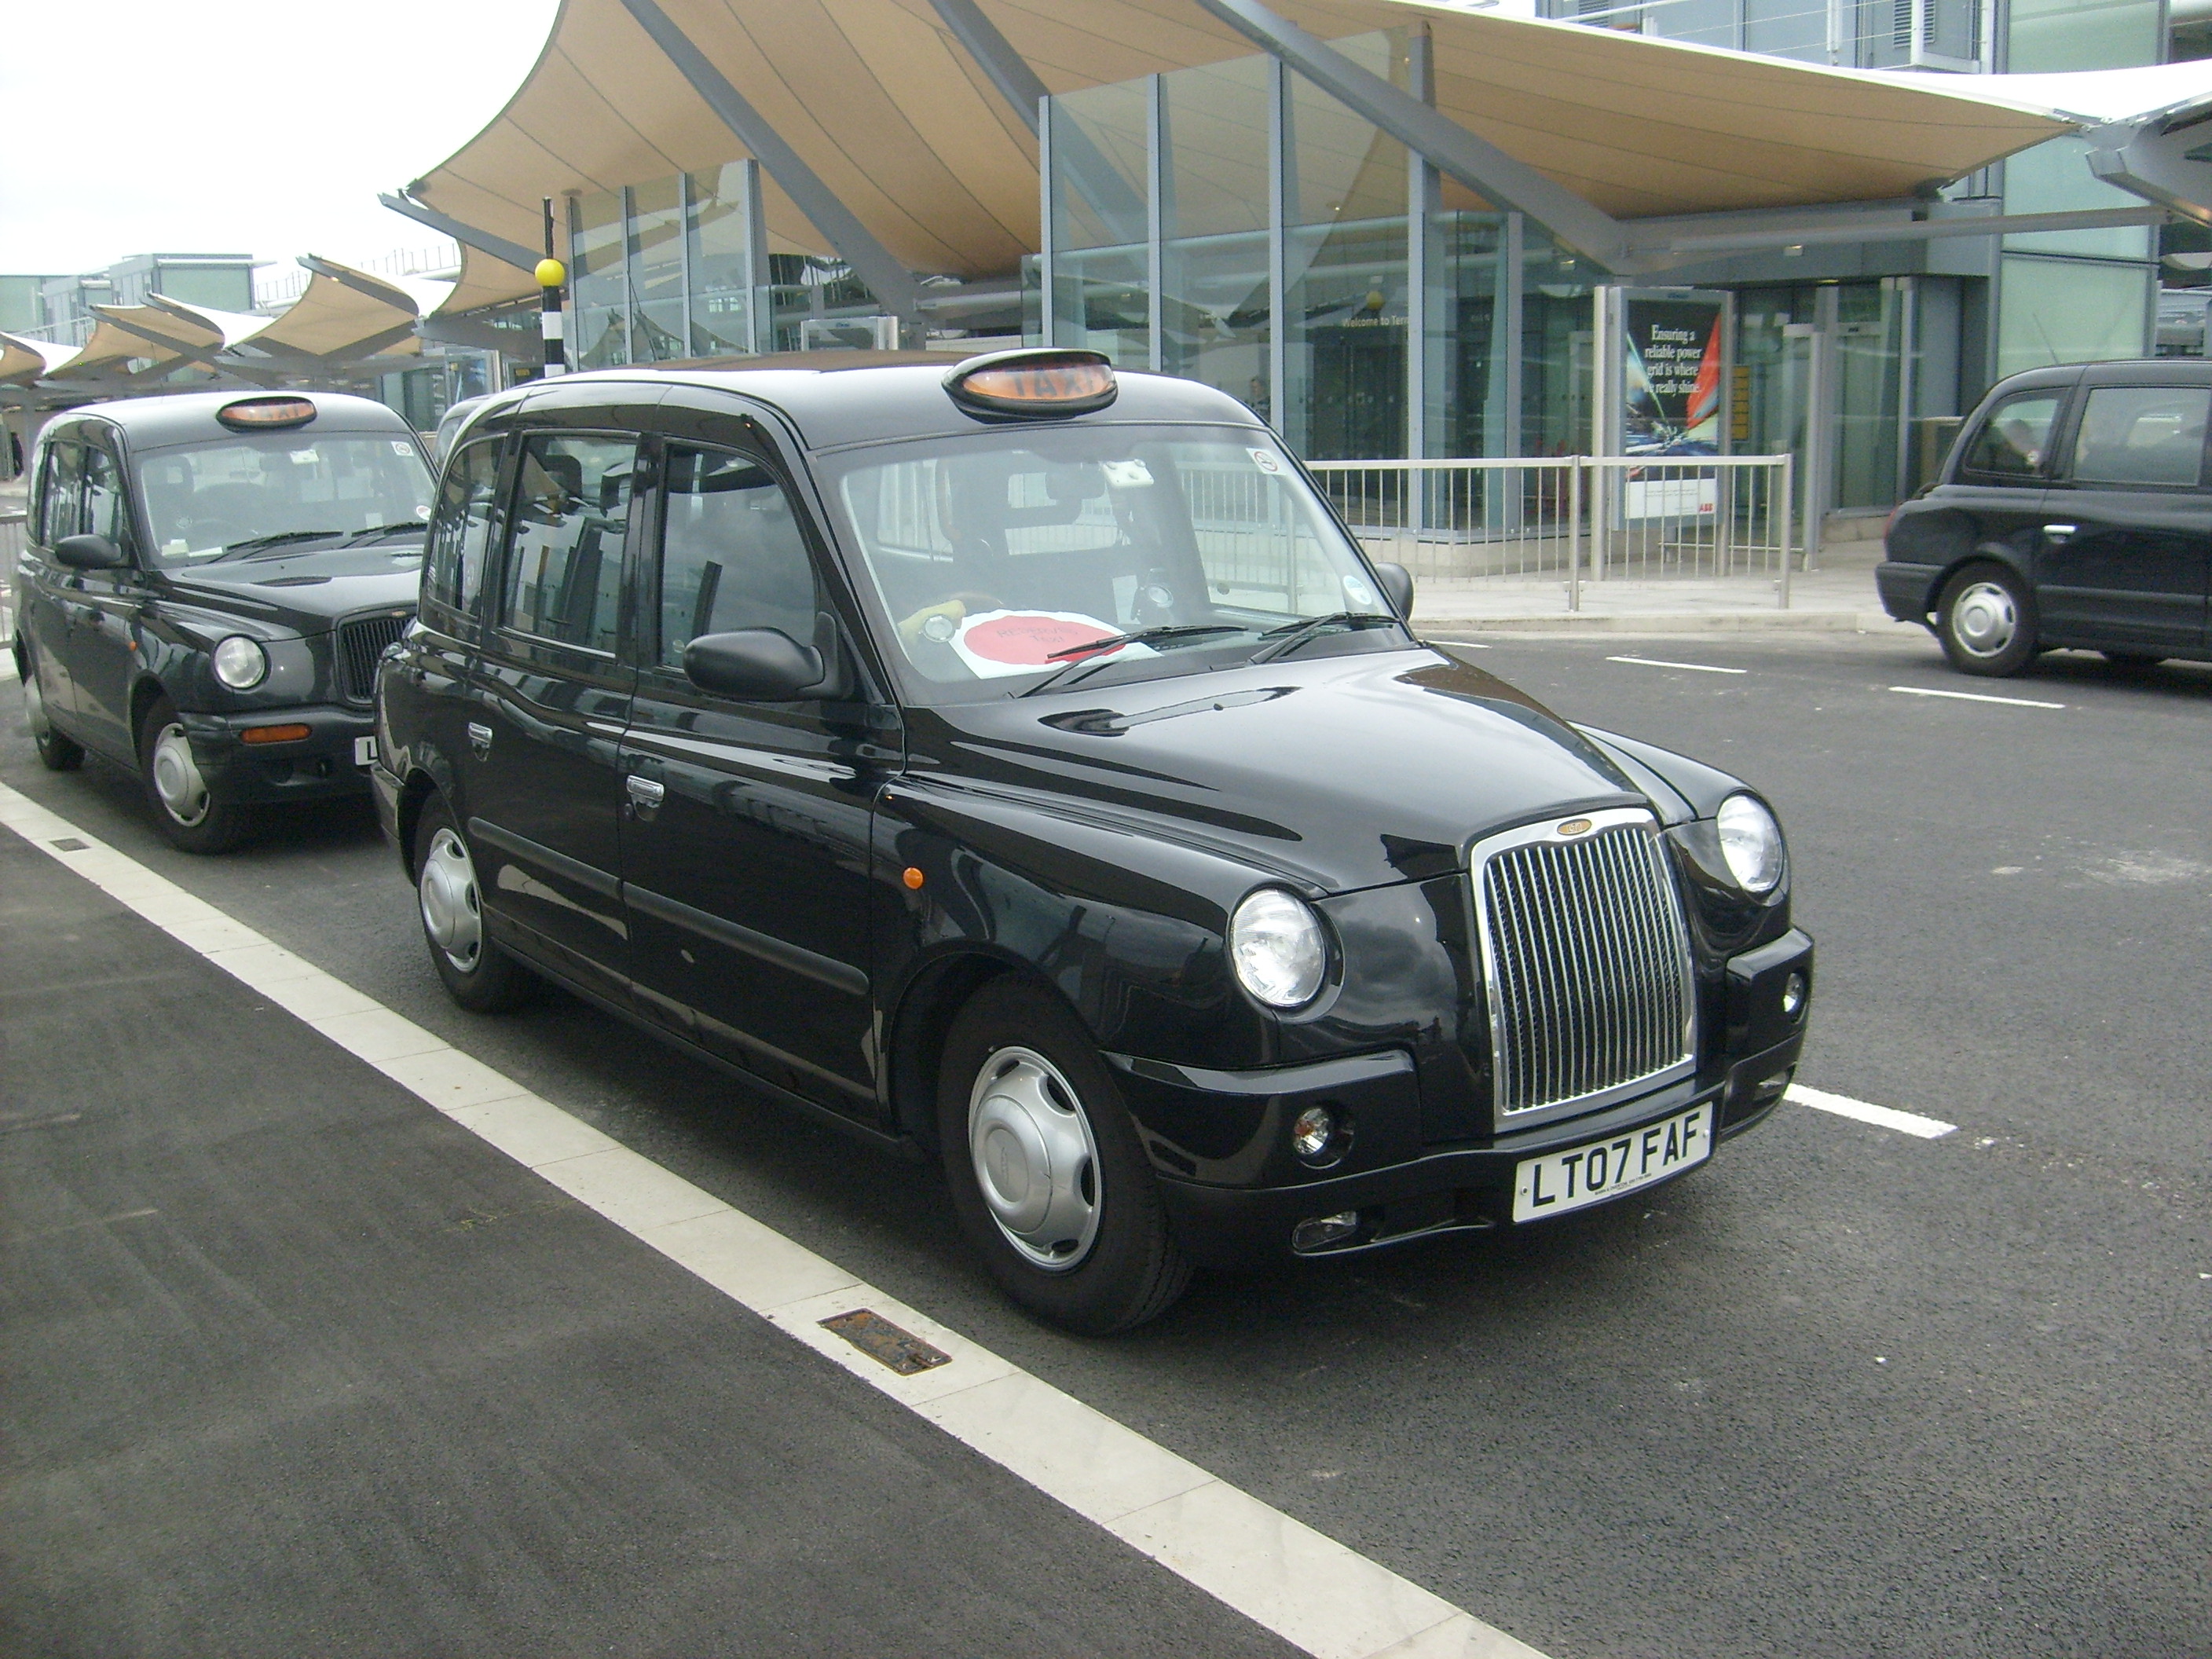 black cab Heathrow Airport